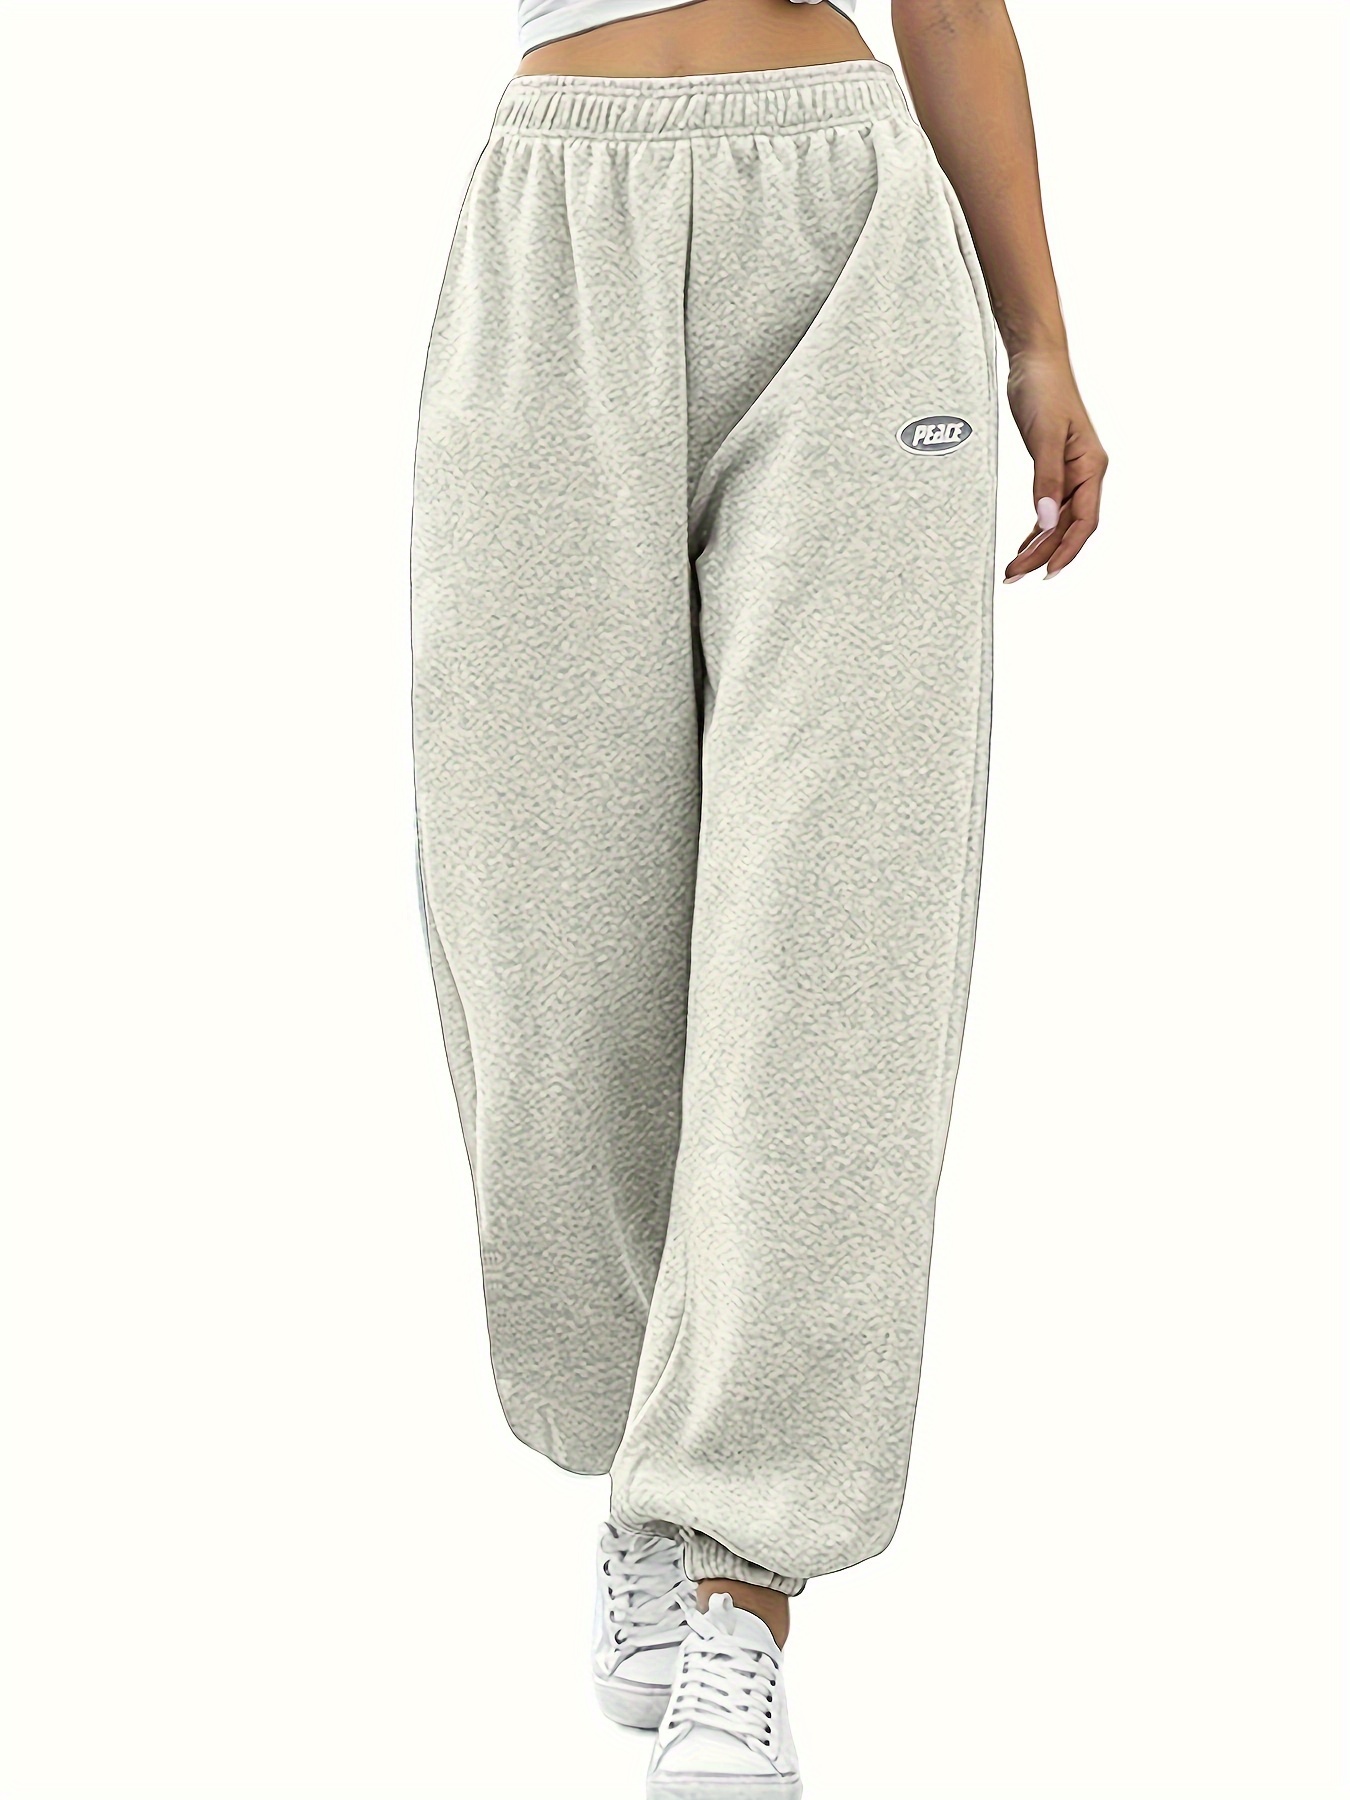 Womens Casual Pants Elastic Waist Solid Sweatpants Grey XL 